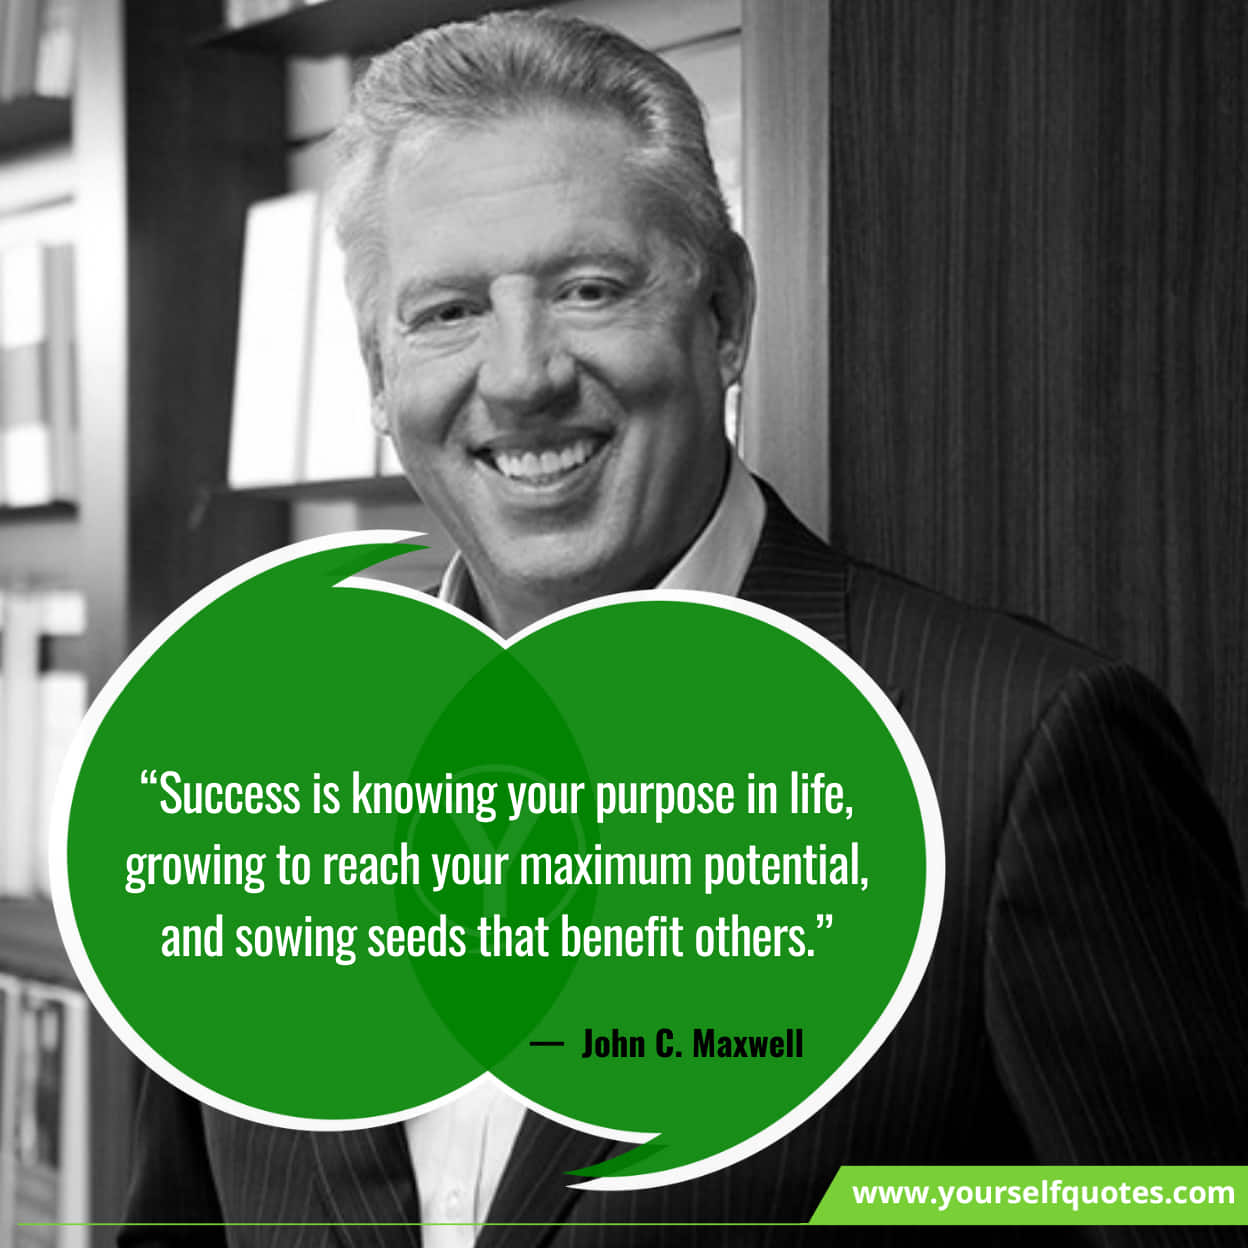 John C. Maxwell Quotes On Success